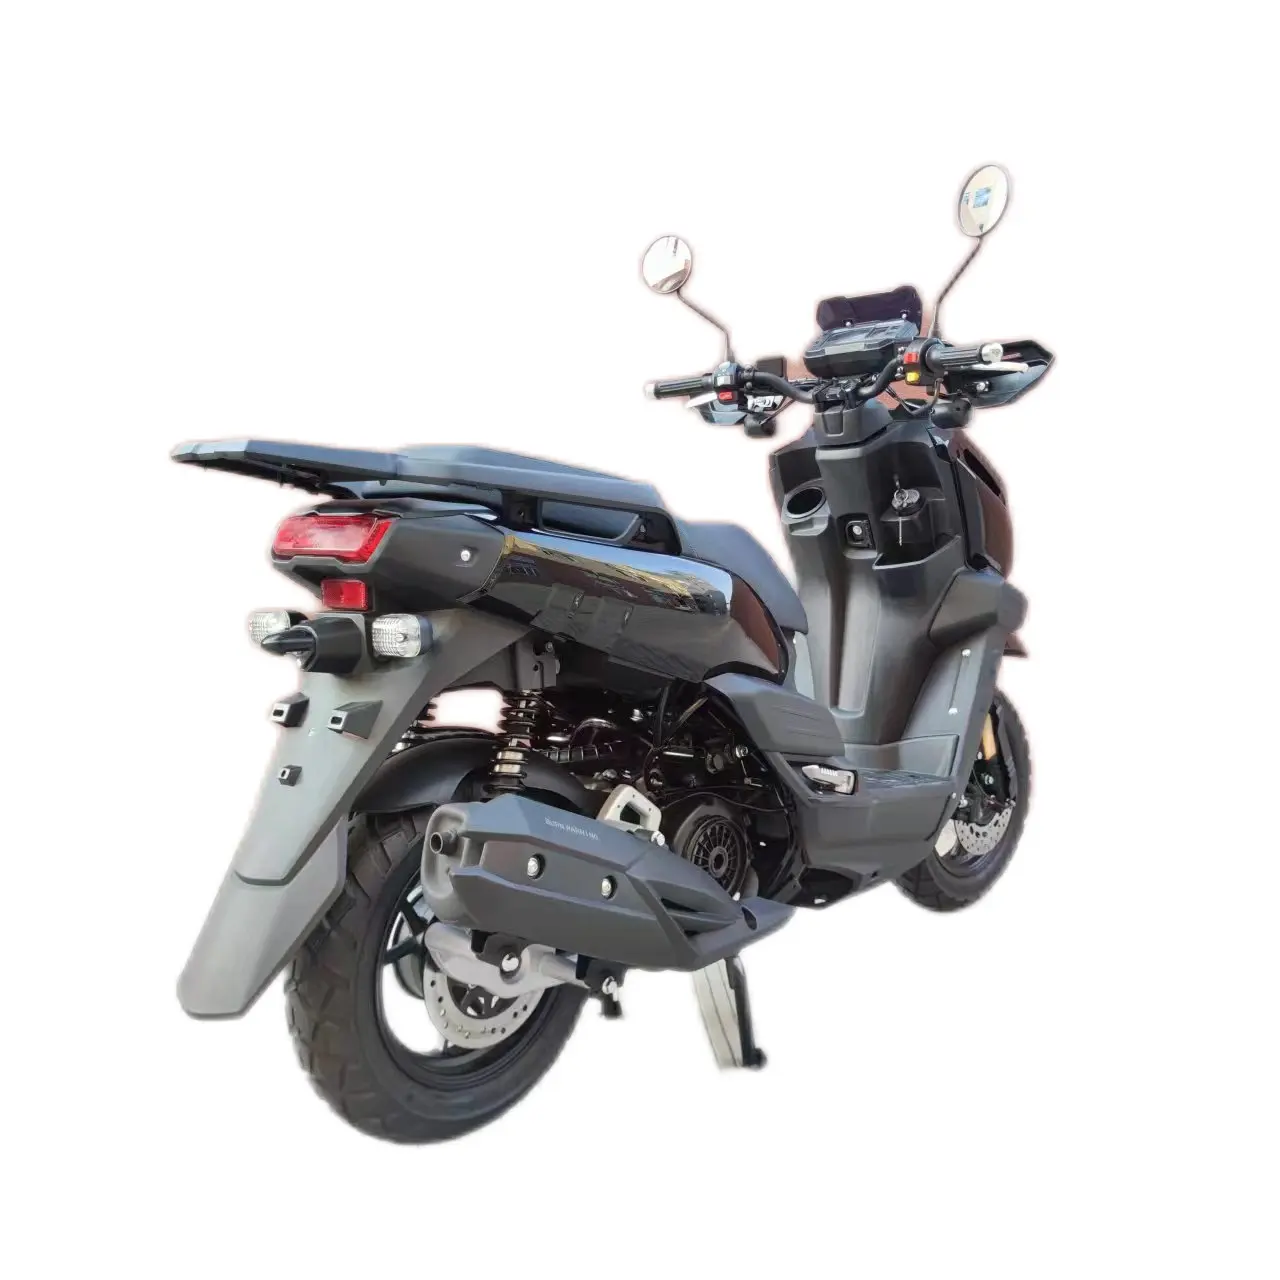 Penjualan pabrik 150cc motor balap silinder tunggal Pedal Moped skuter sepeda motor bensin 150cc